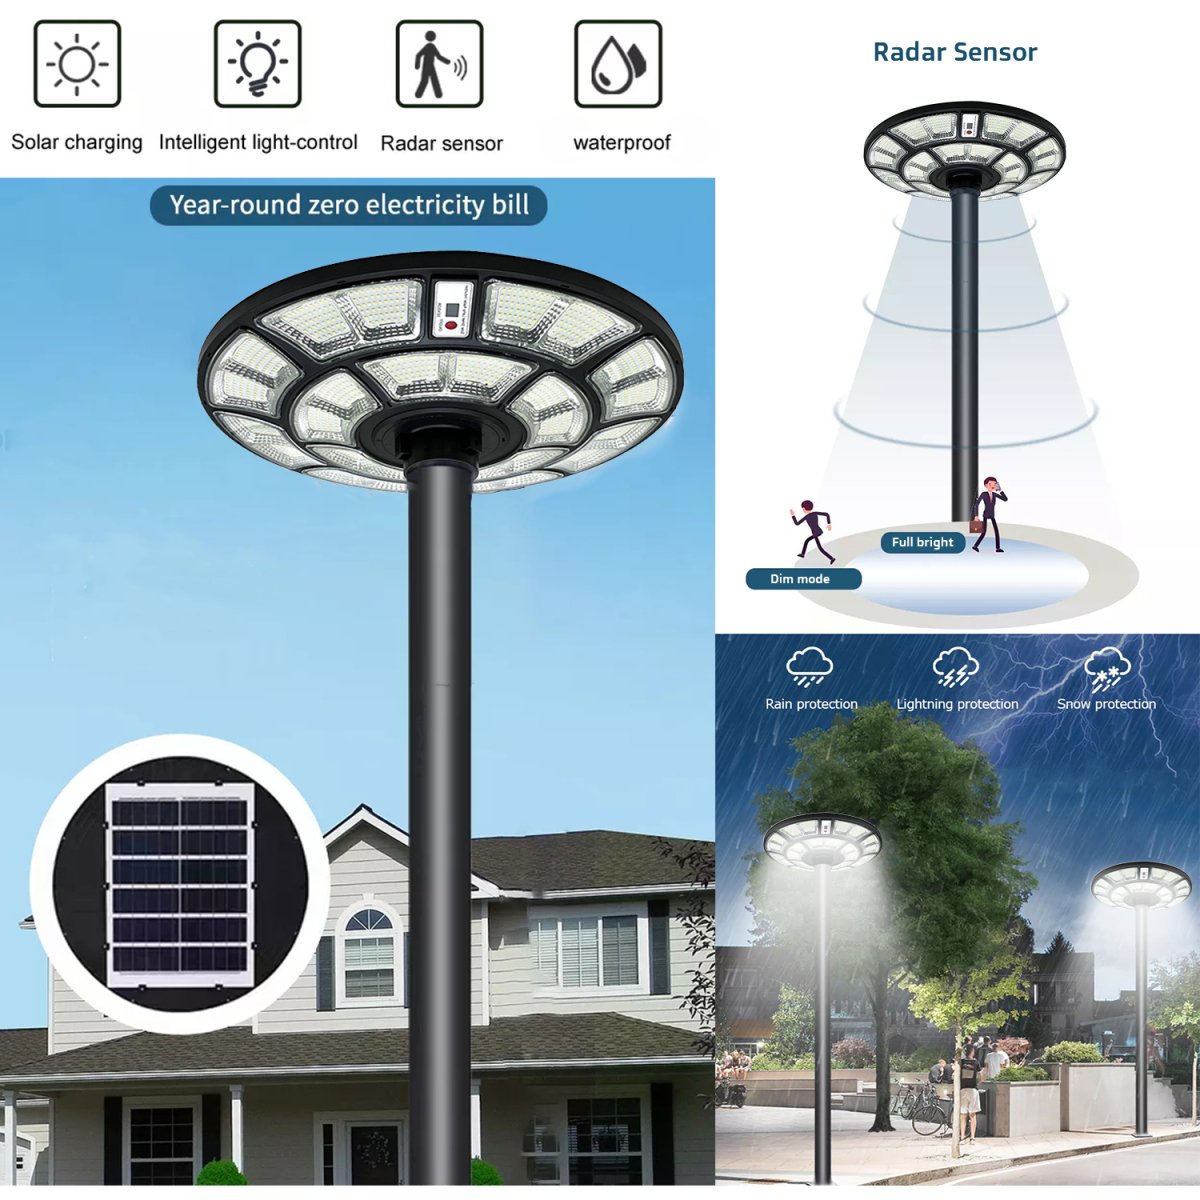 Hardoll 500W Solar UFO Light for Home Garden LED Lamp Waterproof Outdoor Lantern Lamp(Cool White)(Pole not Included) (Refurbished) - Hardoll